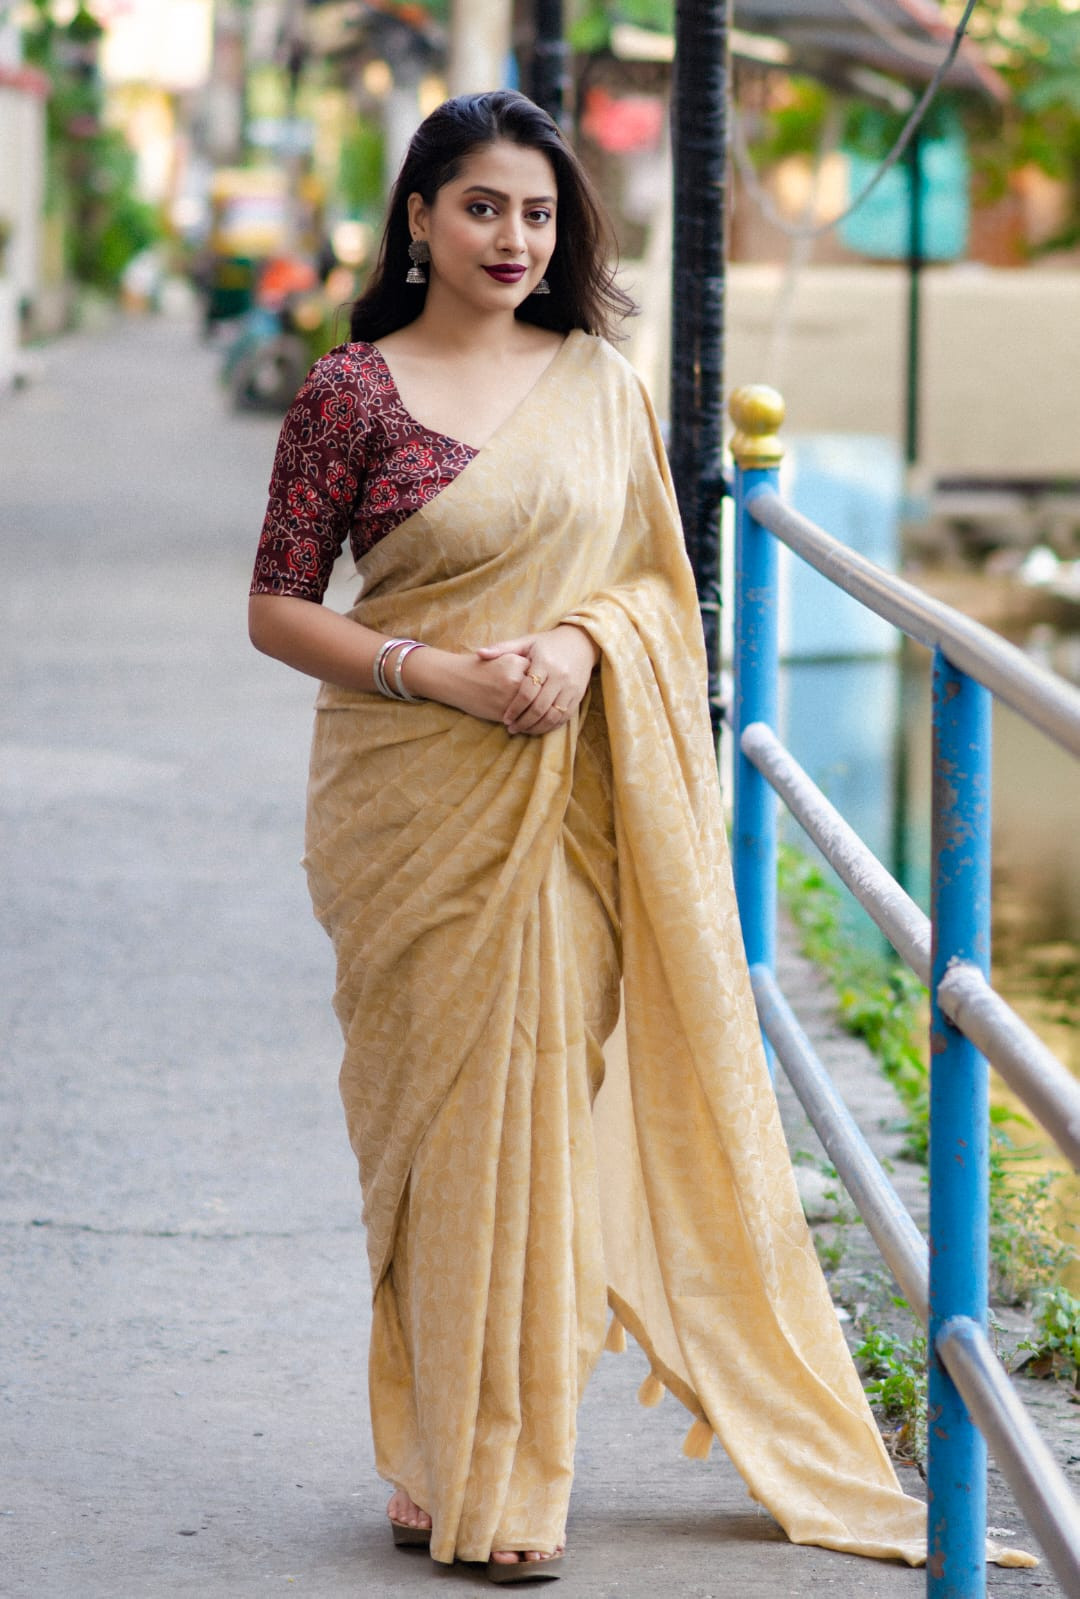 Two tone Soft Cotton silk woven saree - Gold